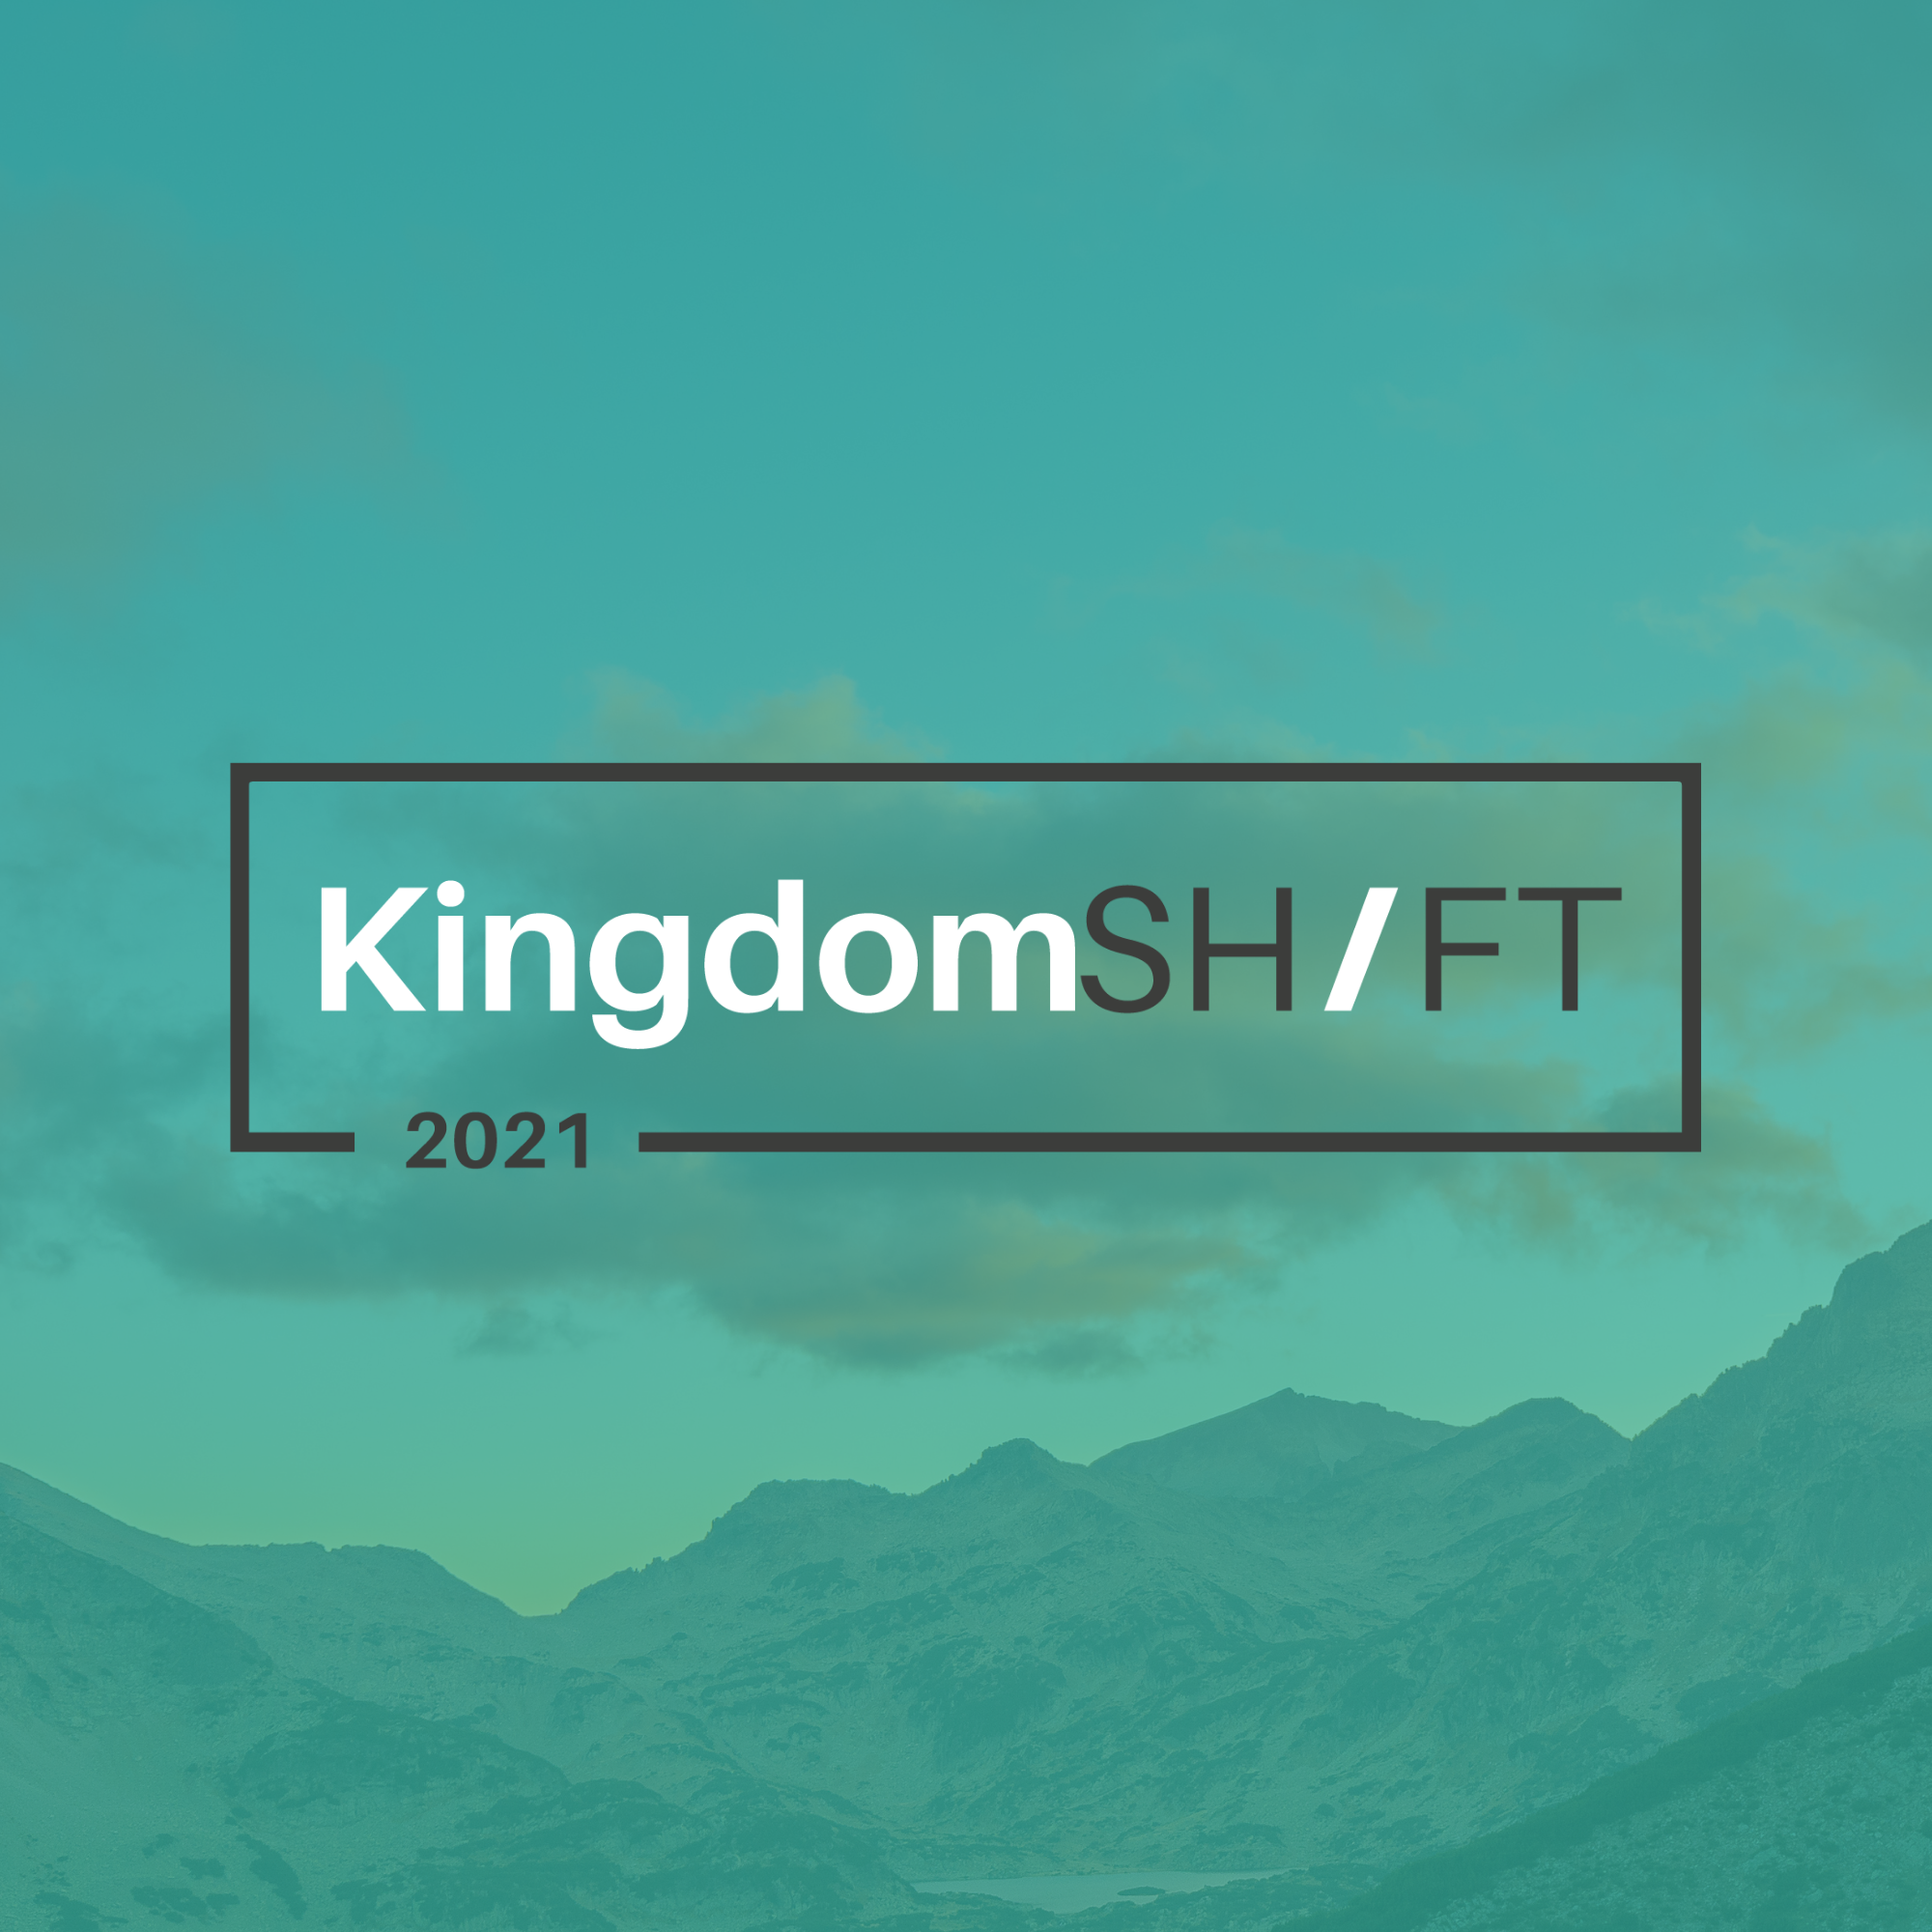 Kingdom Shift Conference